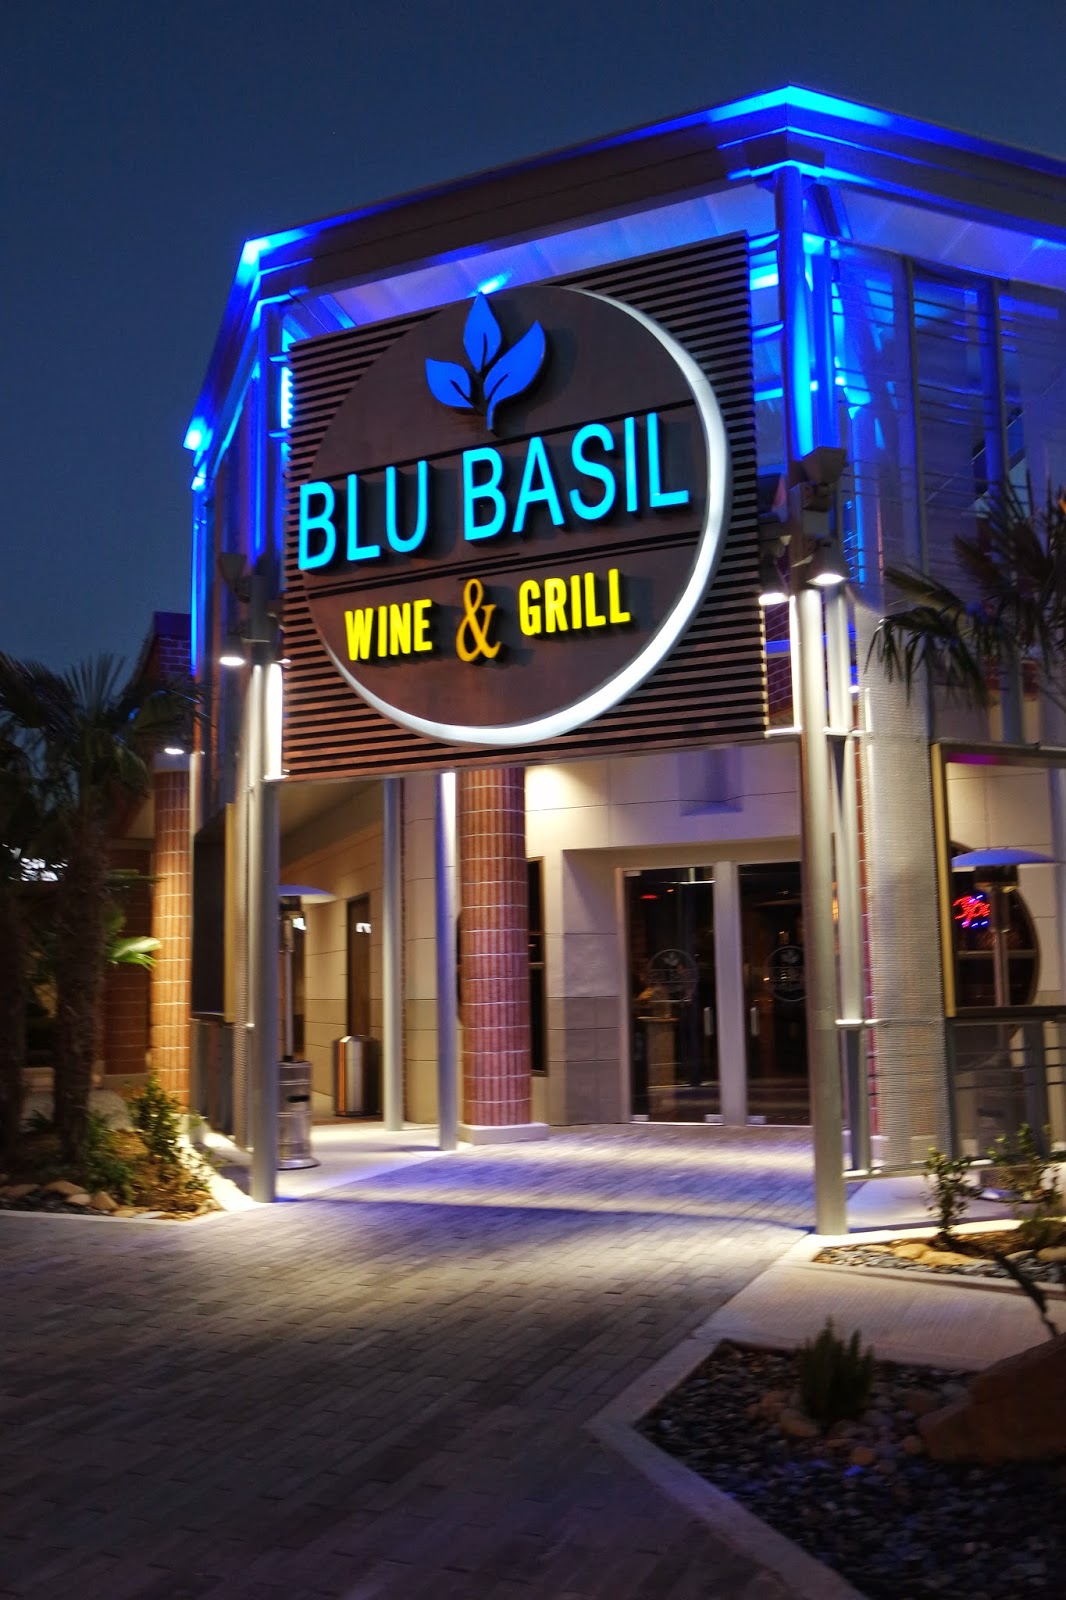 BLU BASIL Restaurant